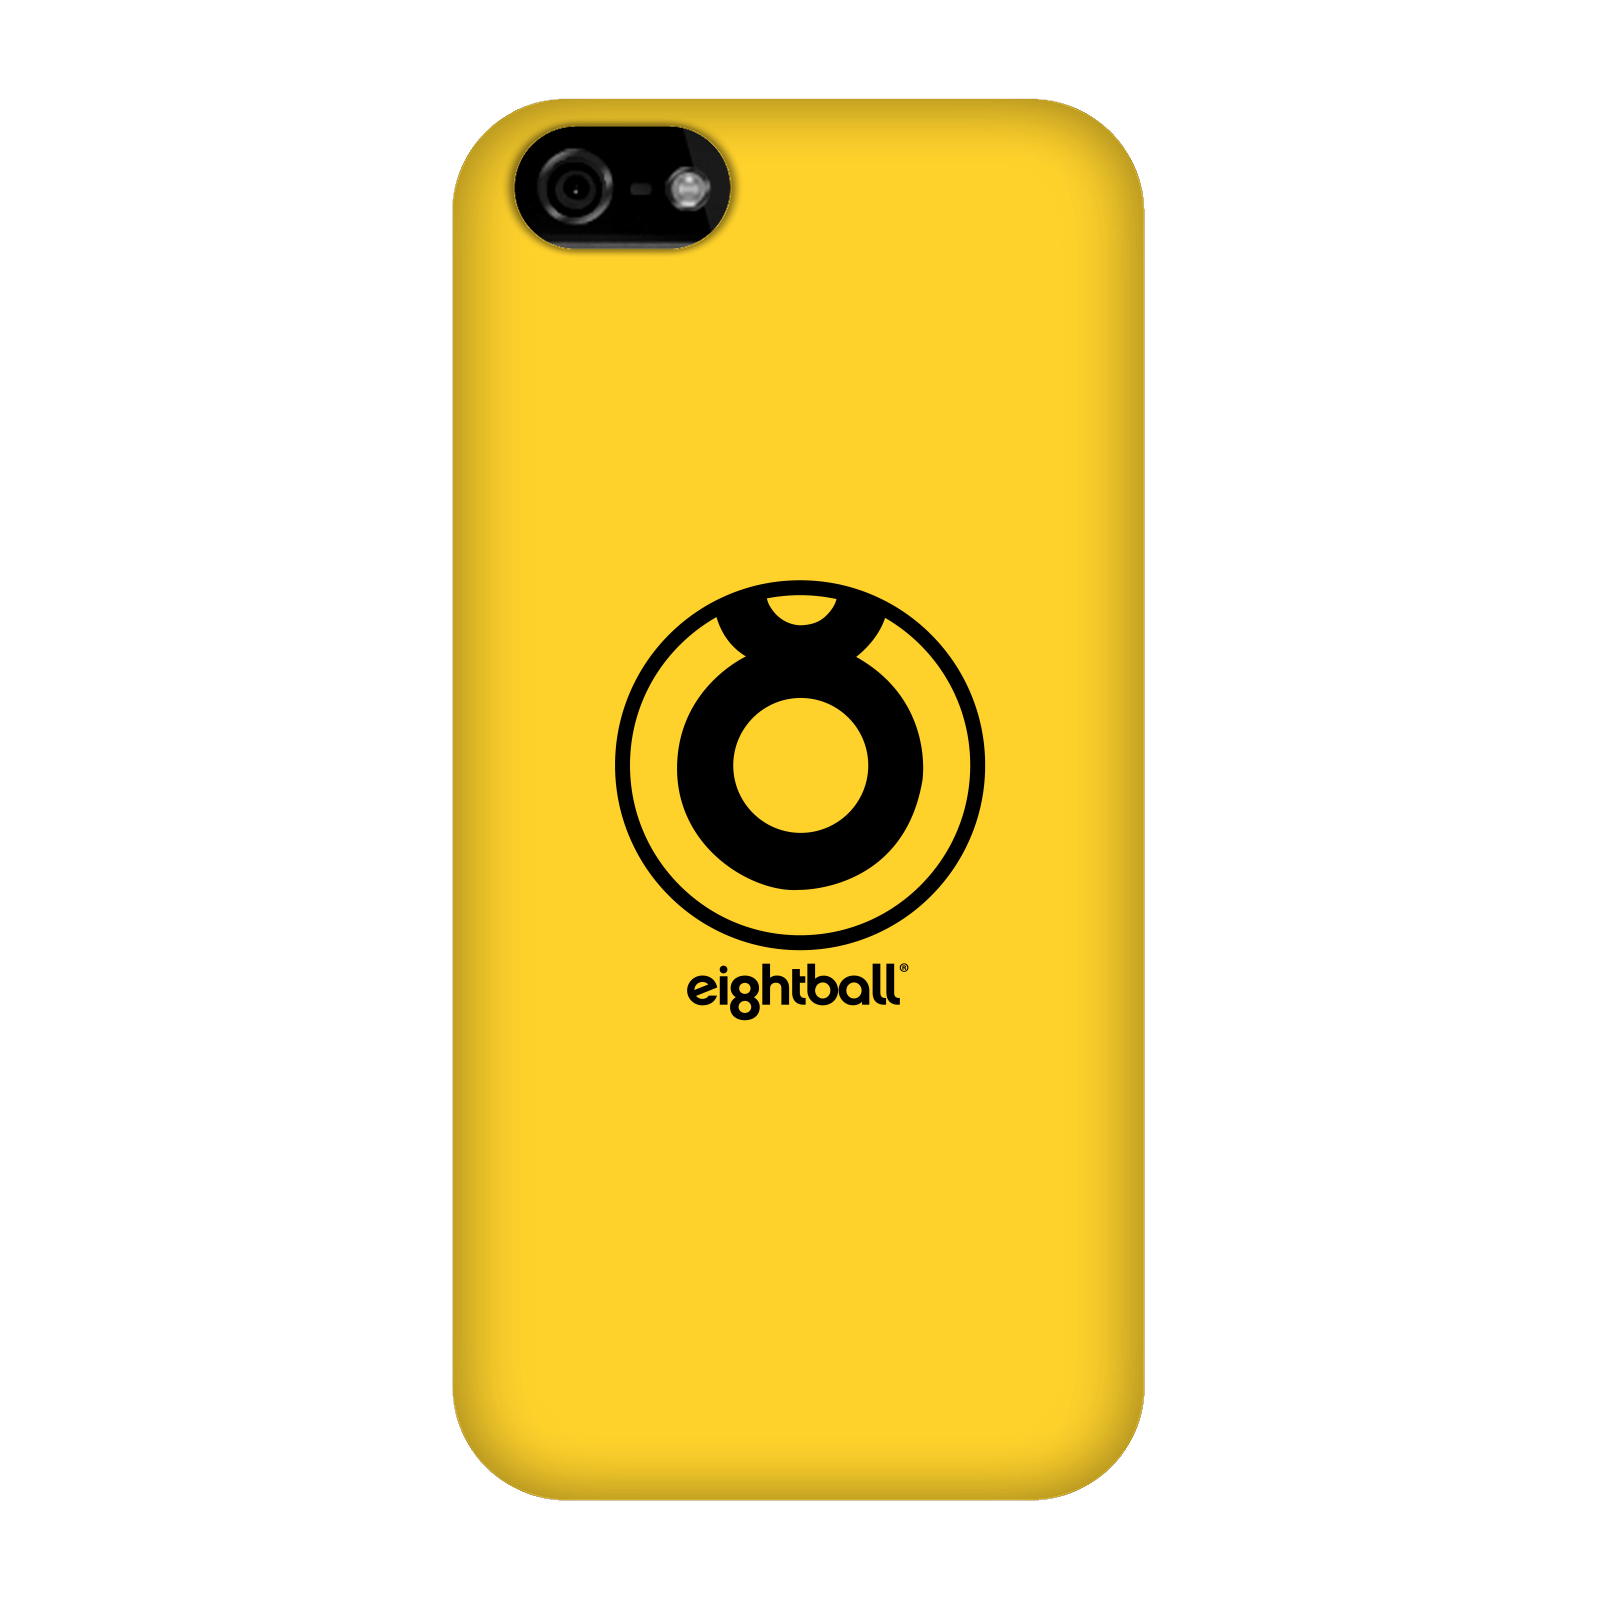 Funda Móvil Ei8htball Large Circle Logo para iPhone y Android - iPhone 5C - Carcasa rígida - Brillante